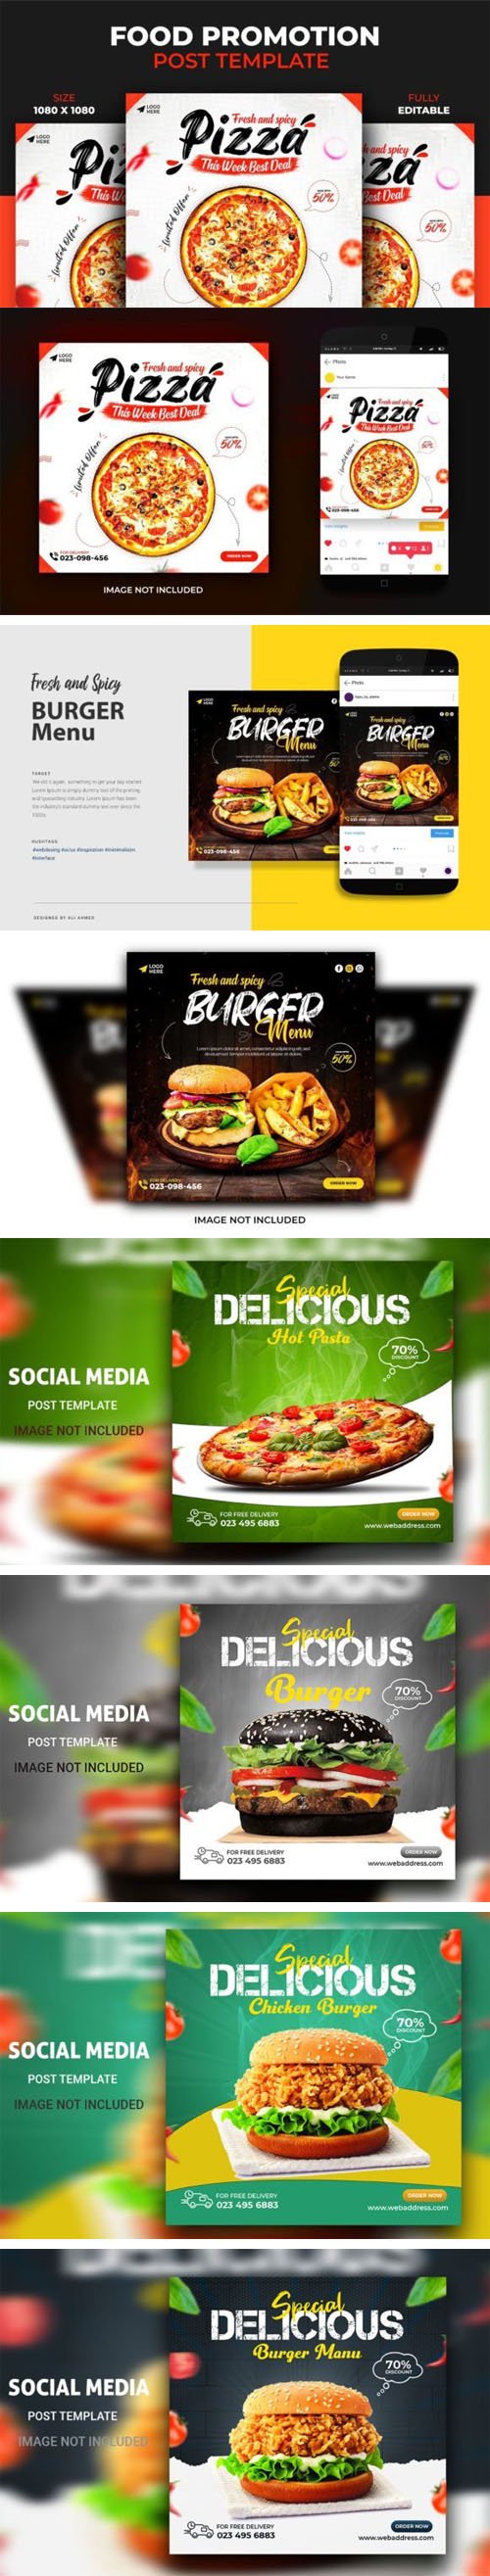 Social Media Posts - Food Promotion PSD Templates